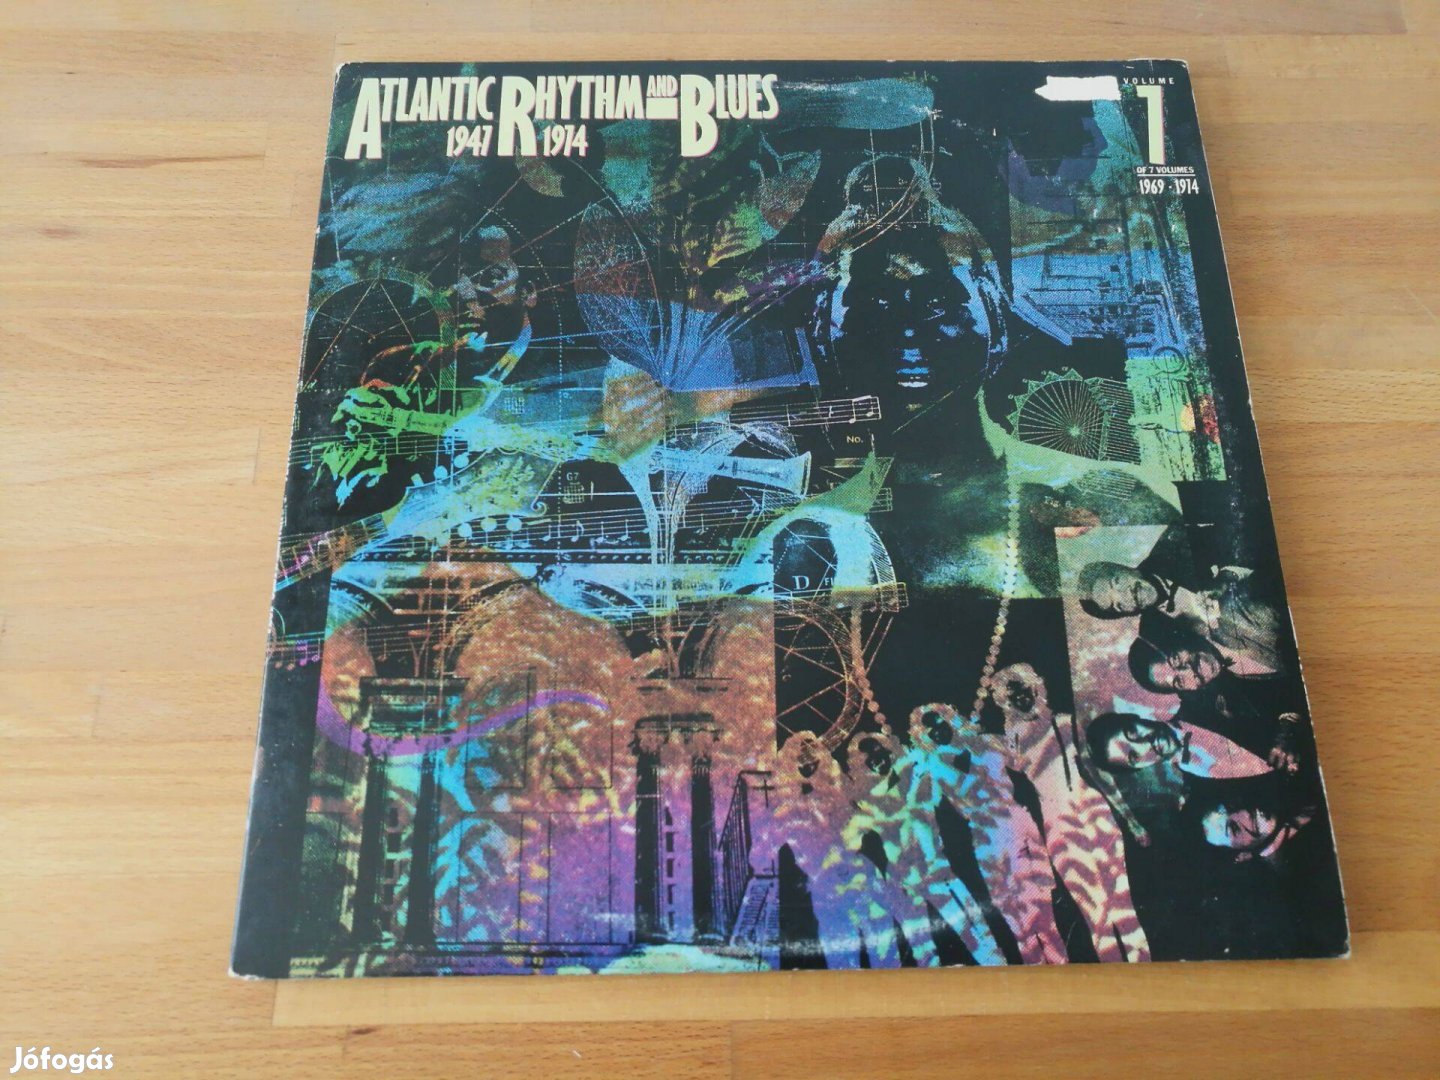 Atlantic Rhythm & Blues 1947-1974 volume 7 (Atlantic USA 1985 2LP)